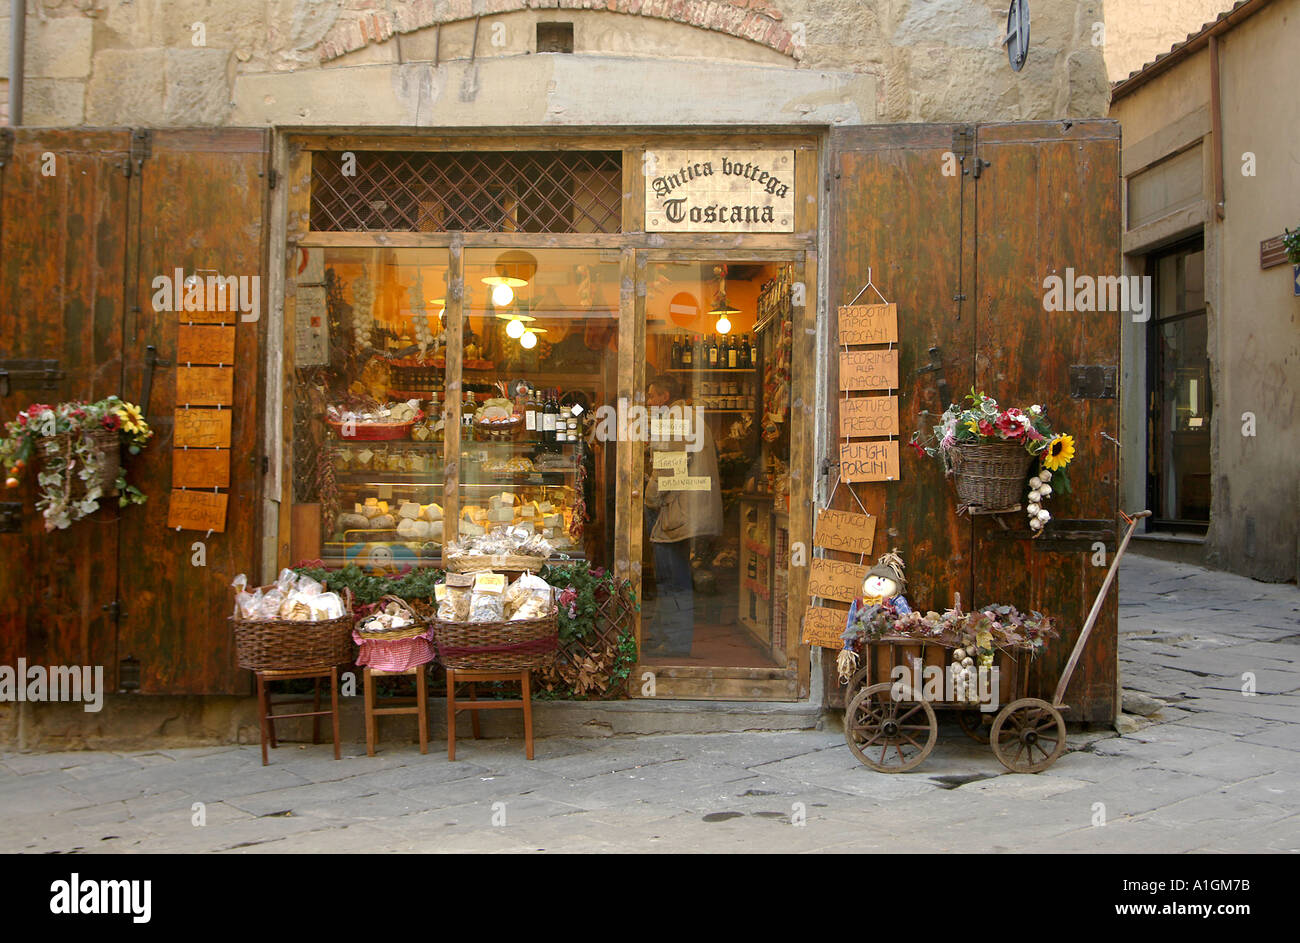 Antica Bottega Toscana or Old food boutique Tuscany in Corso Italia Arezzo Stock Photo